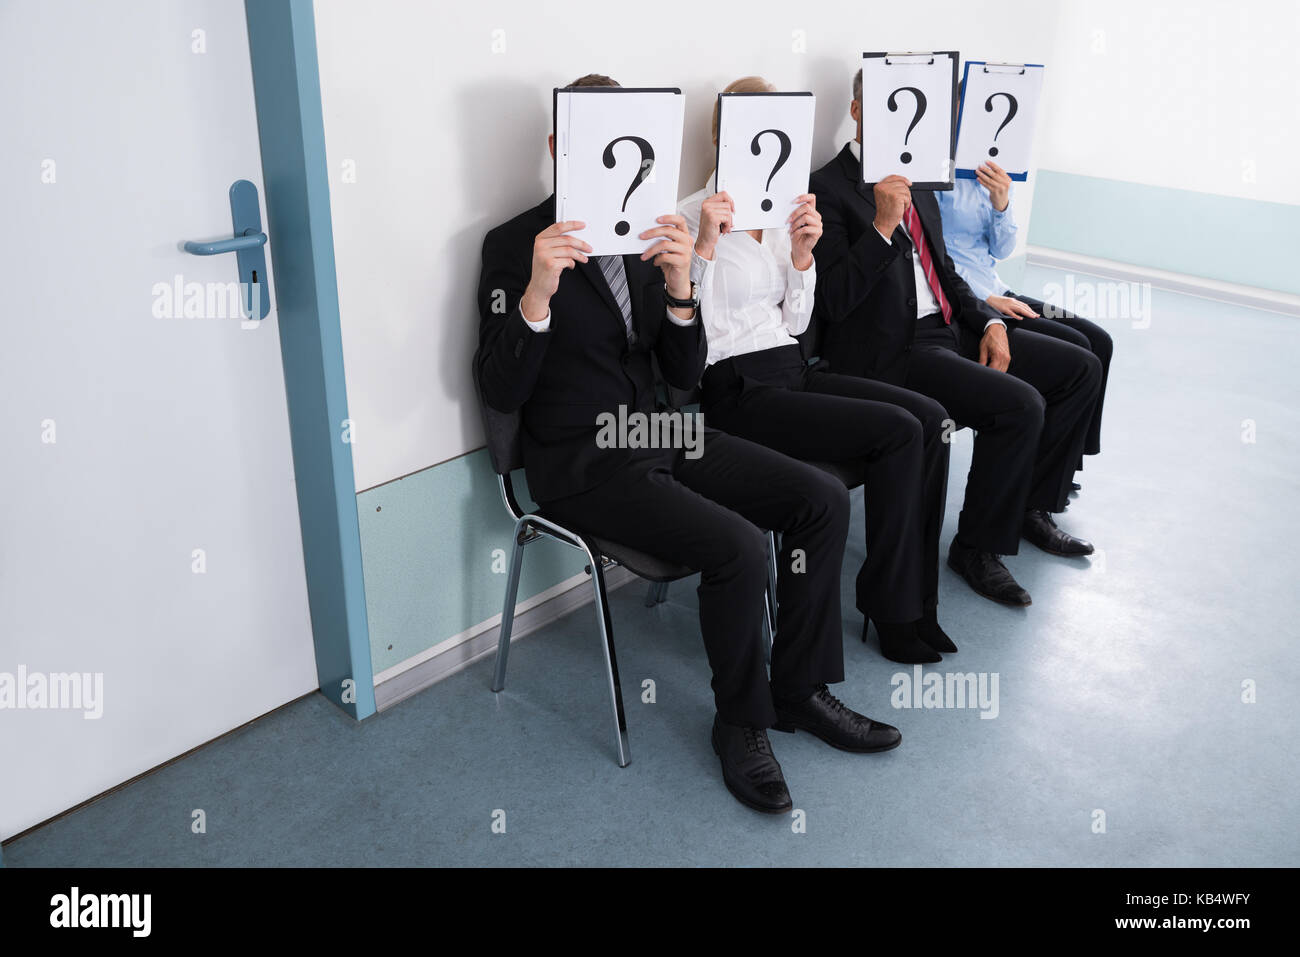 Businesspeople sitting on chair se cacher derrière question mark sign Banque D'Images